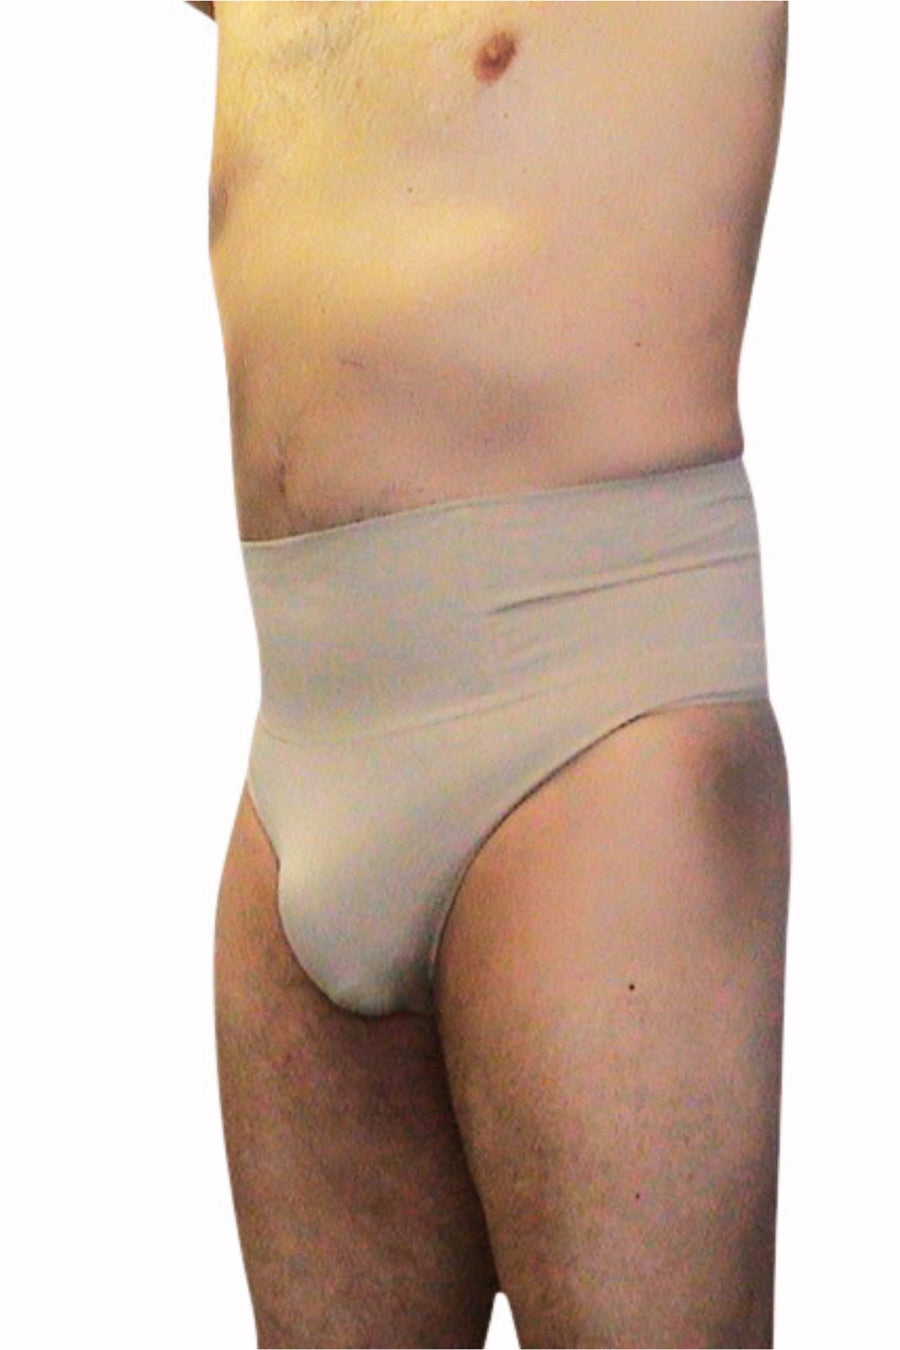 BfM Mens Mid Waist Tummy Control Thong Underwear